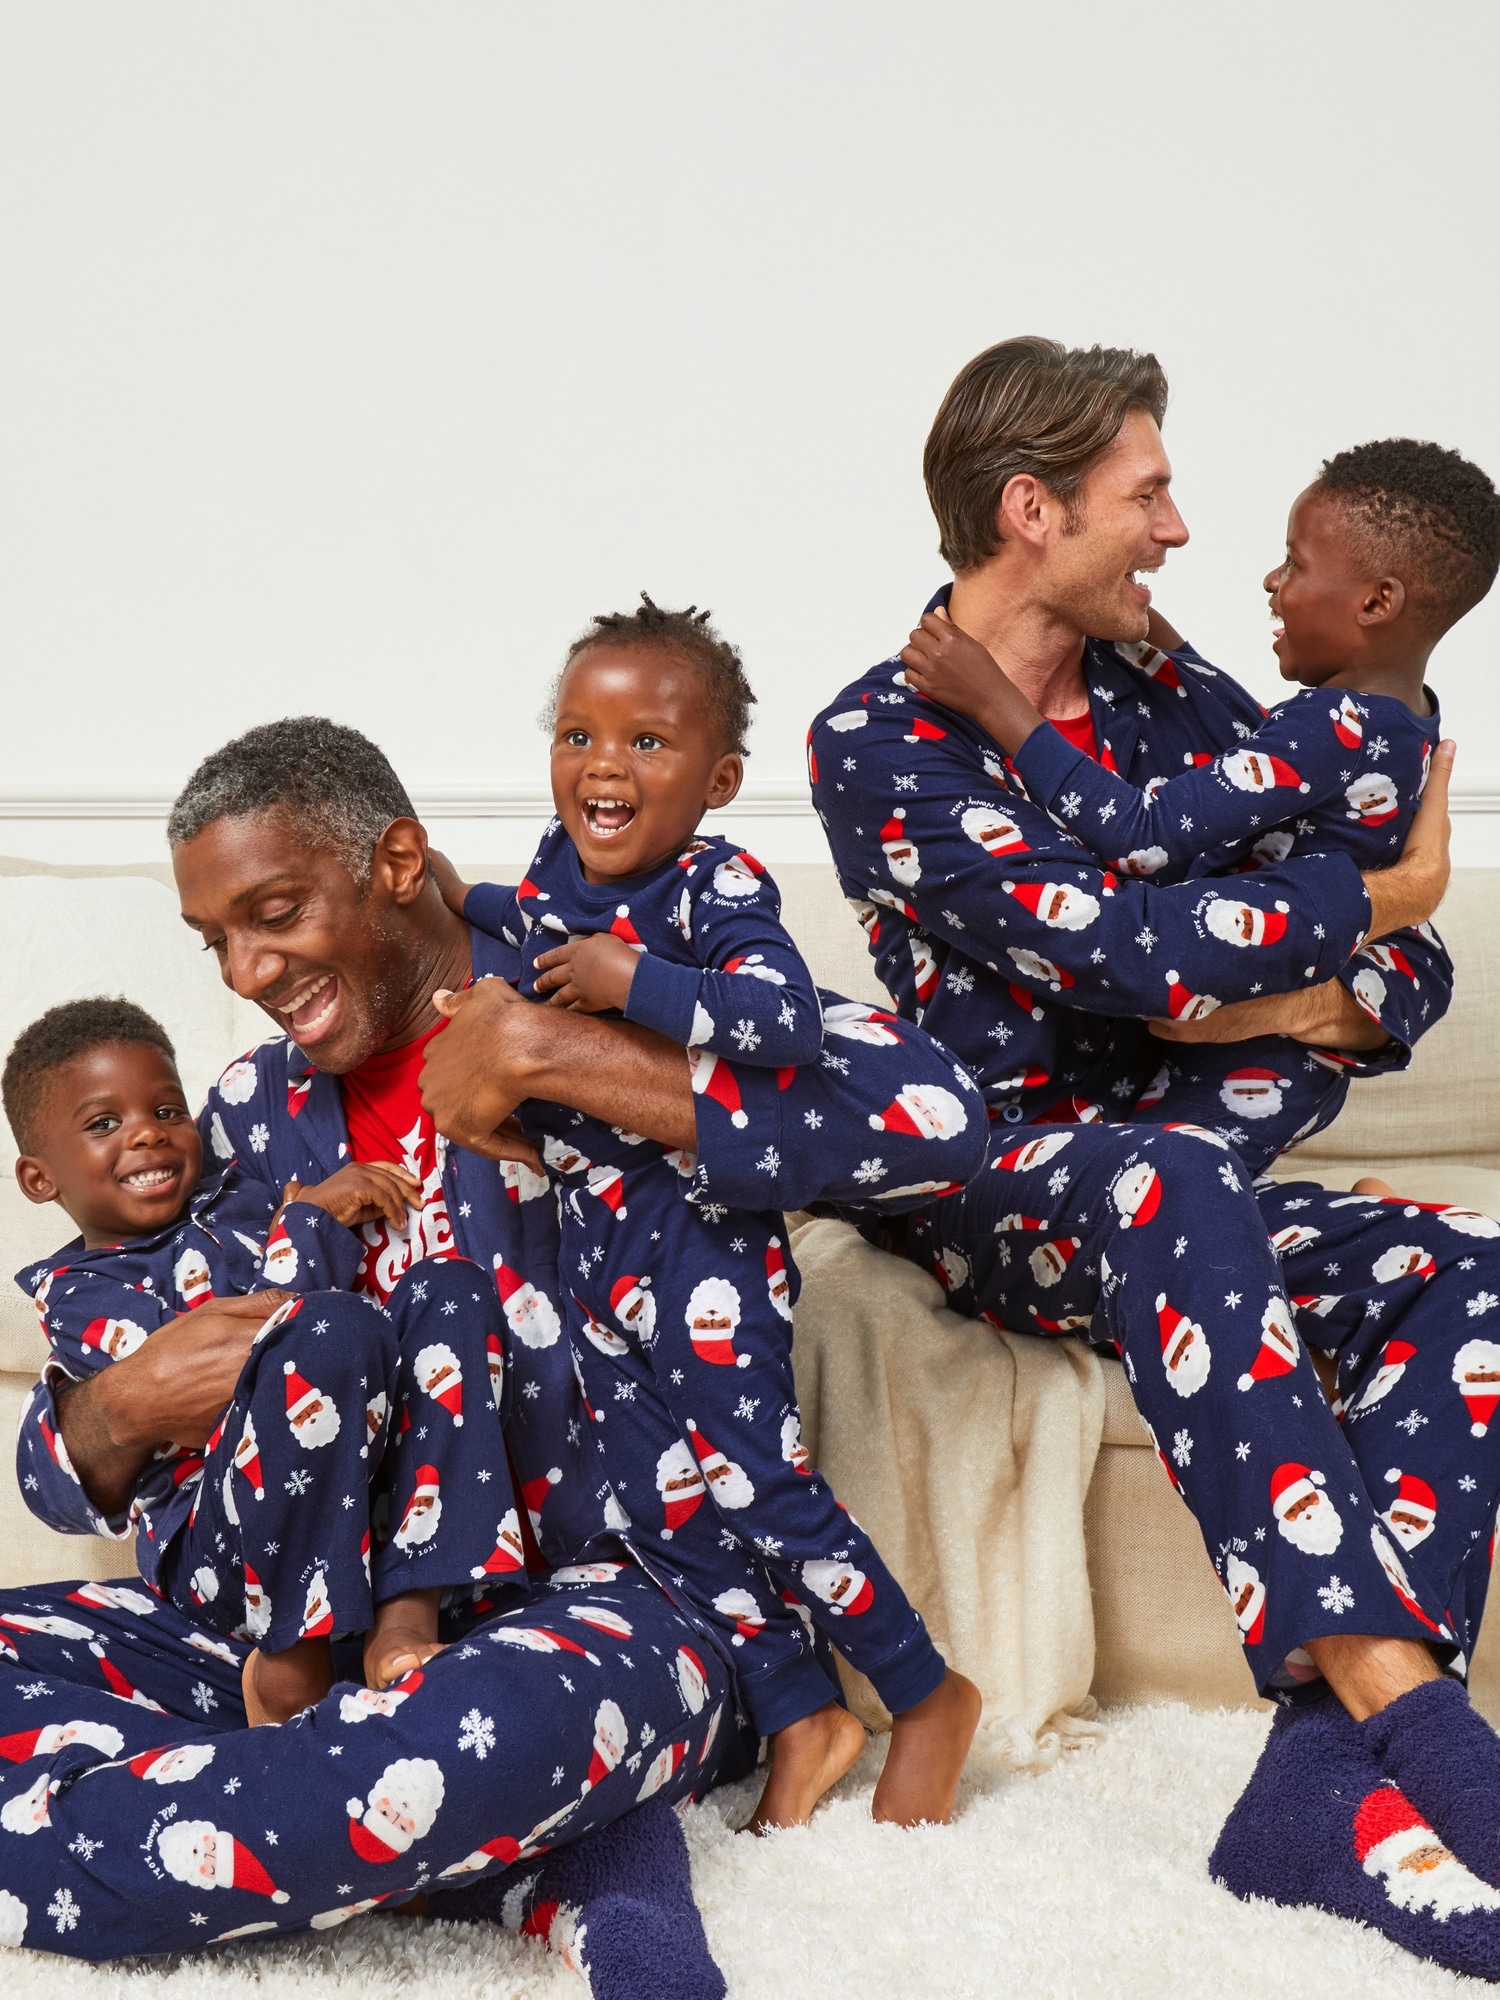 Pyjama de famille assorti pour noël Vert • Tous en Pyjama !